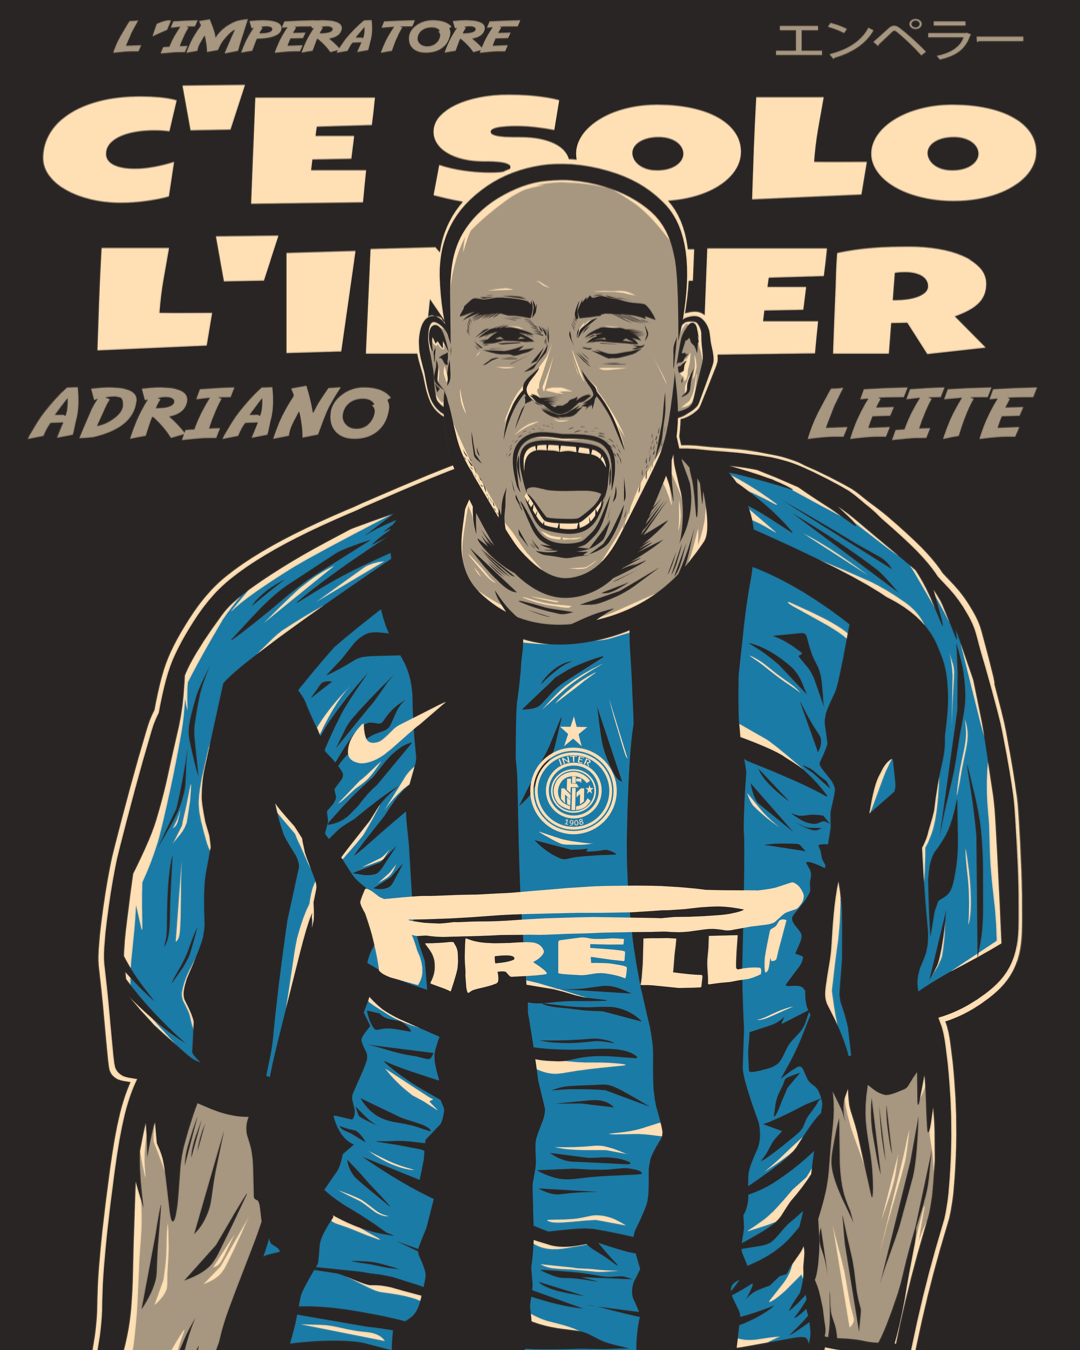 Adriano ‘L’imperatore’ Inter Milan Football shirt - Enigma Football